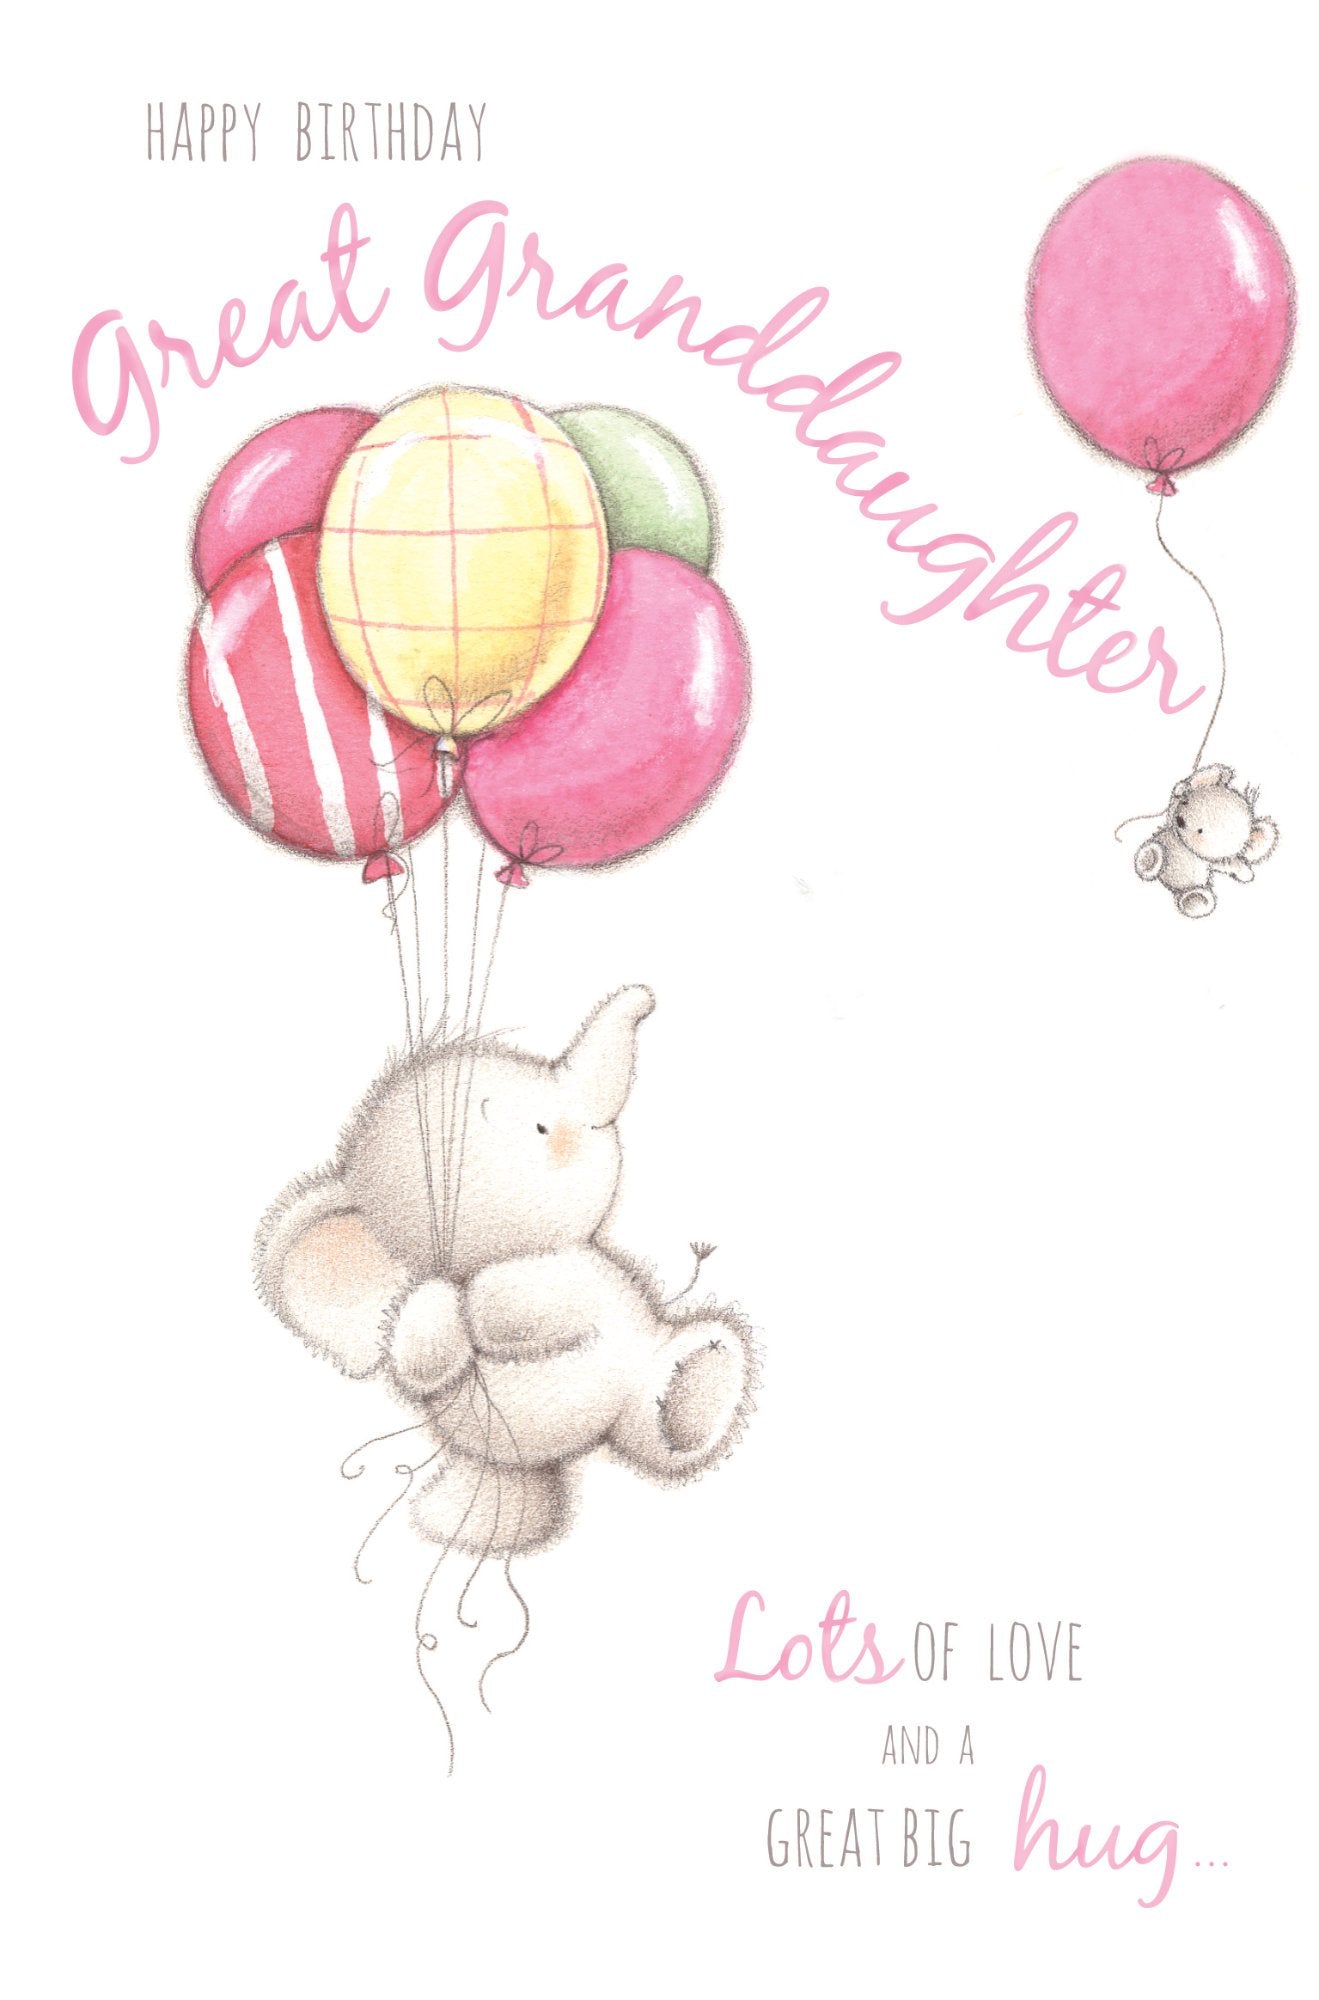 Photograph of Great Granddaughter Elephant Hug Birthday Greetings Card at Nicole's Shop